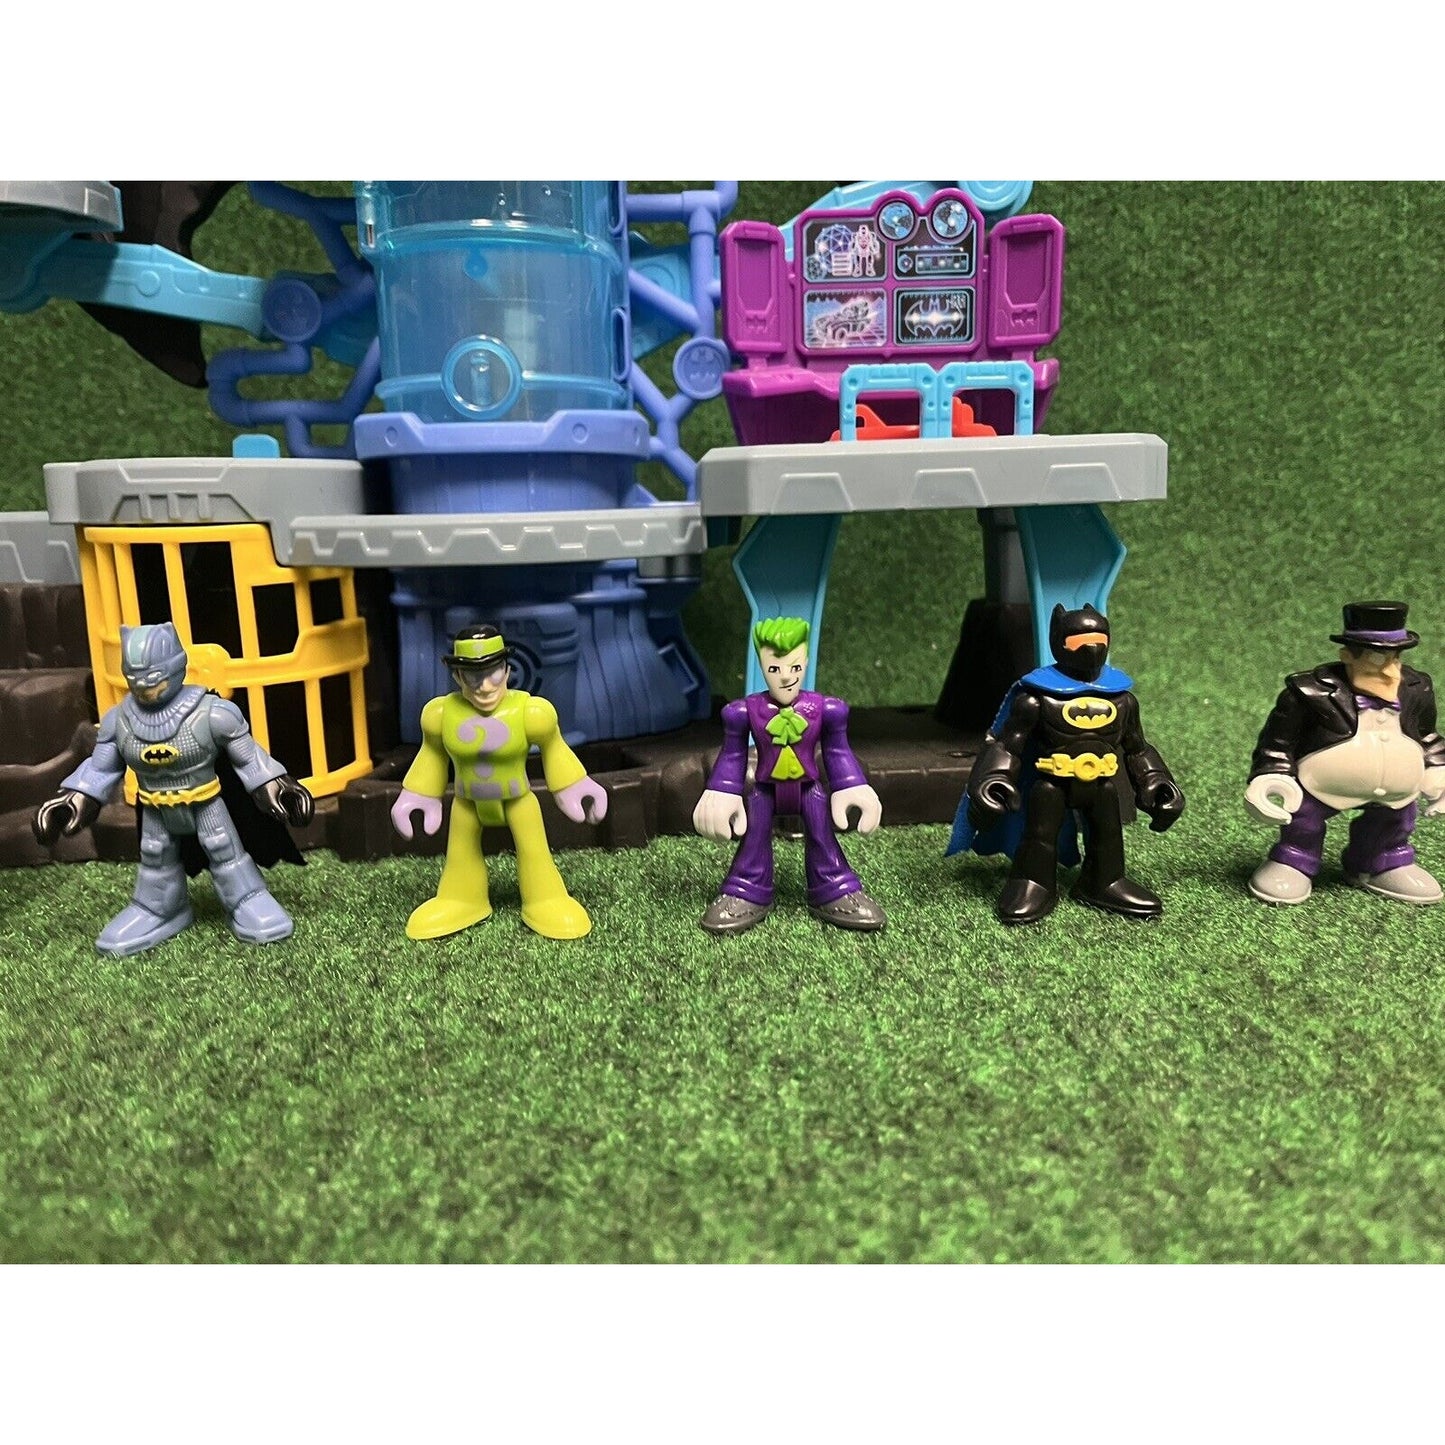 Fisher-Price Imaginext DC Super Friends Bat-Tech Batcave playset Figures Grundy